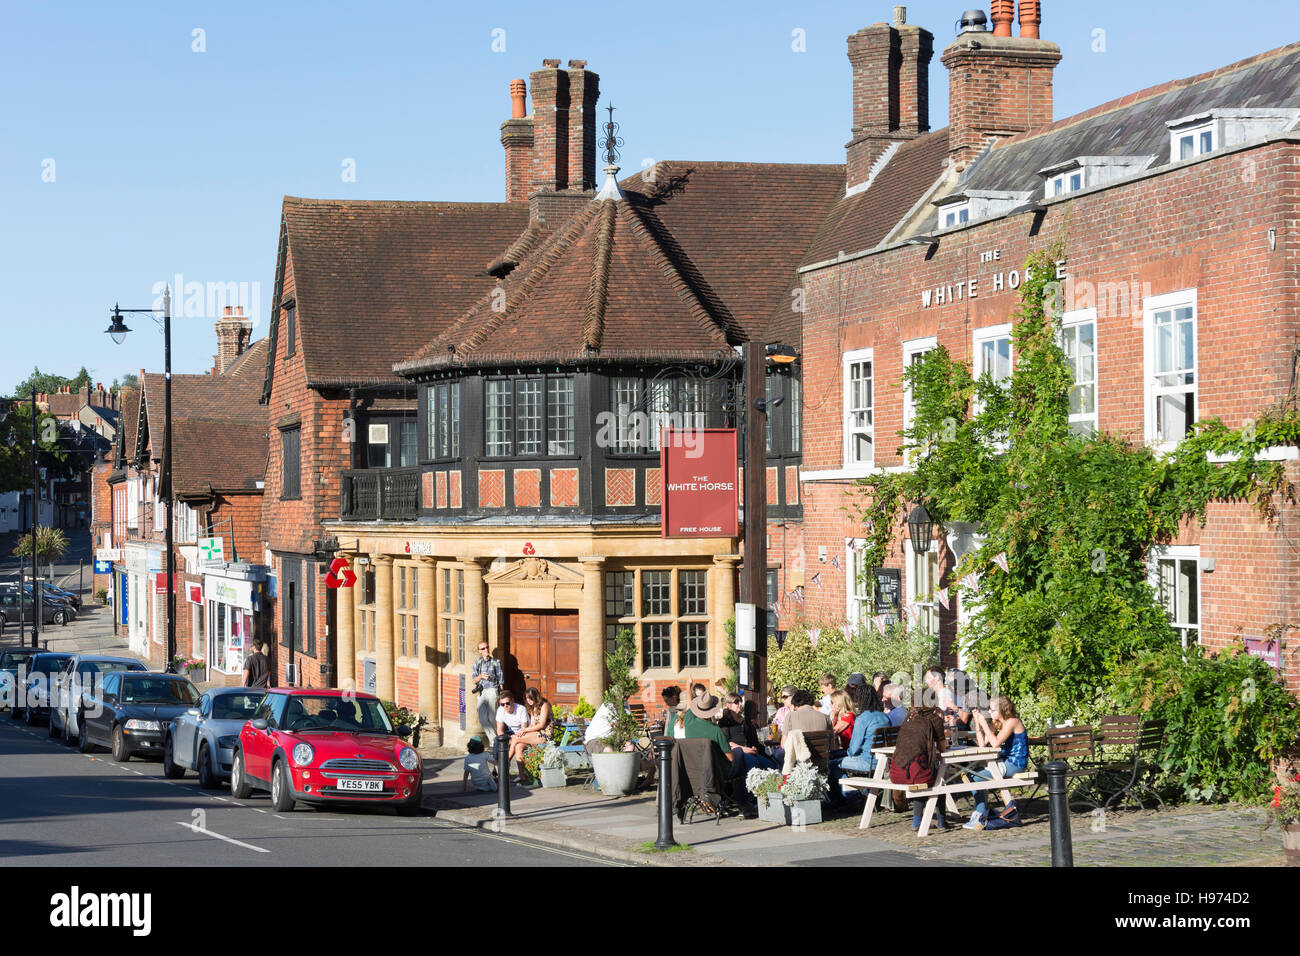 The White Horse Inn, High Street, Haslemere, Surrey, England, United Kingdom Stock Photo